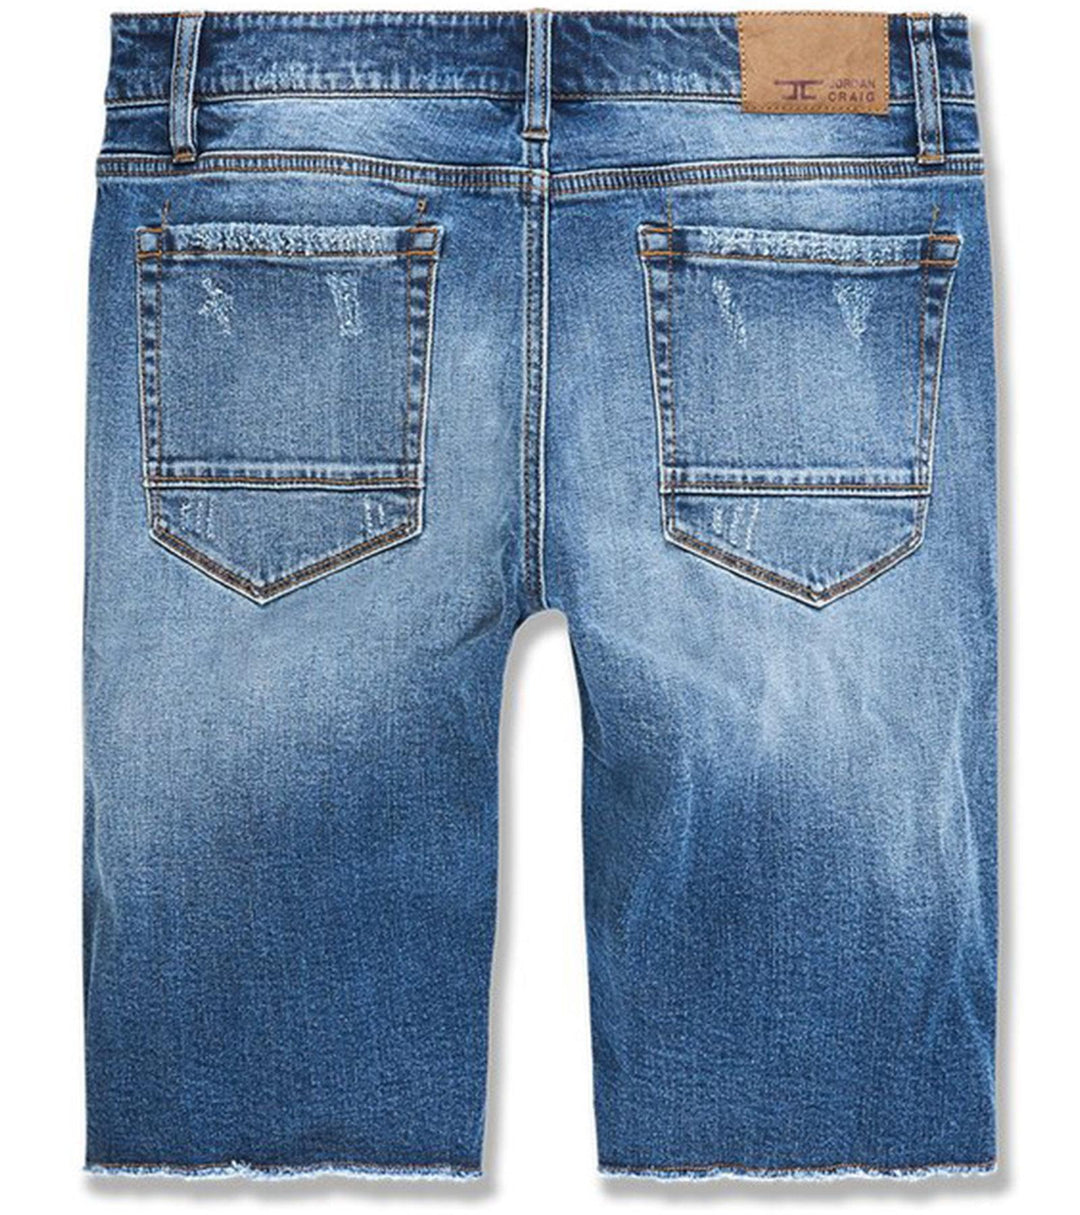 Edison Denim Shorts (Medium Blue) Rear | Jordan Craig